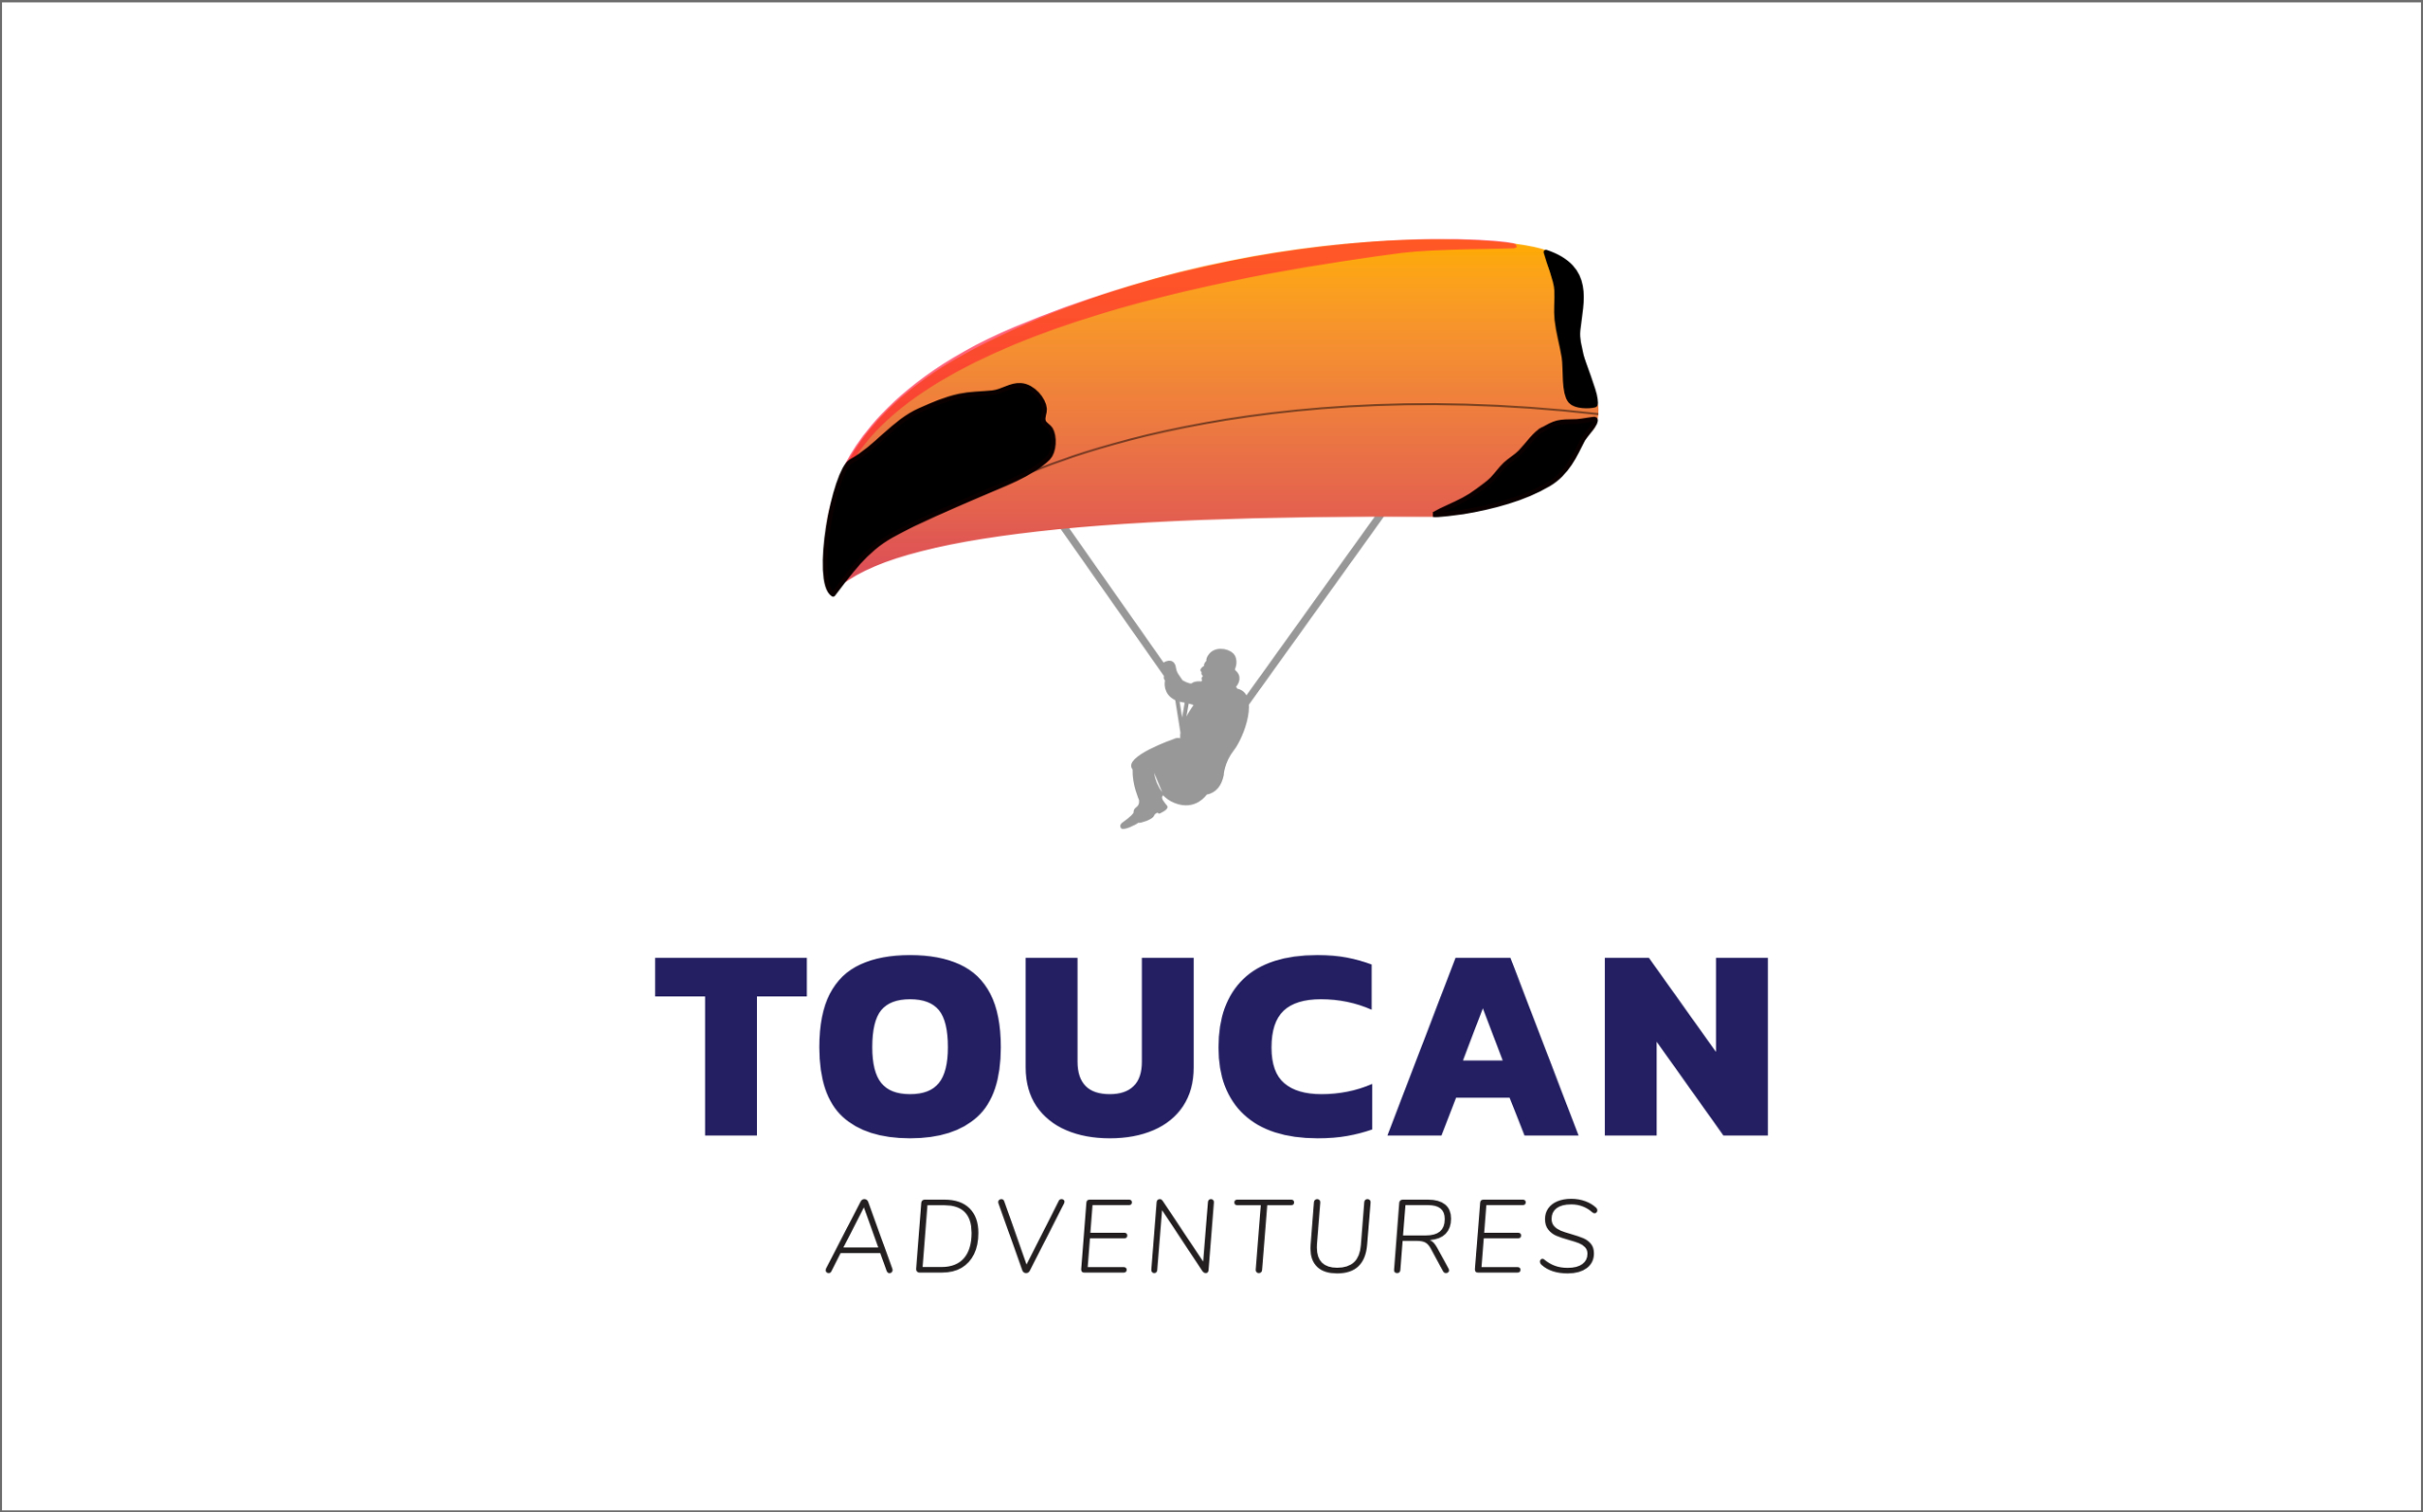 Logo Design for Toucan Adventures.  Made by Jon Glanville - Plymouth Graphic Designer.